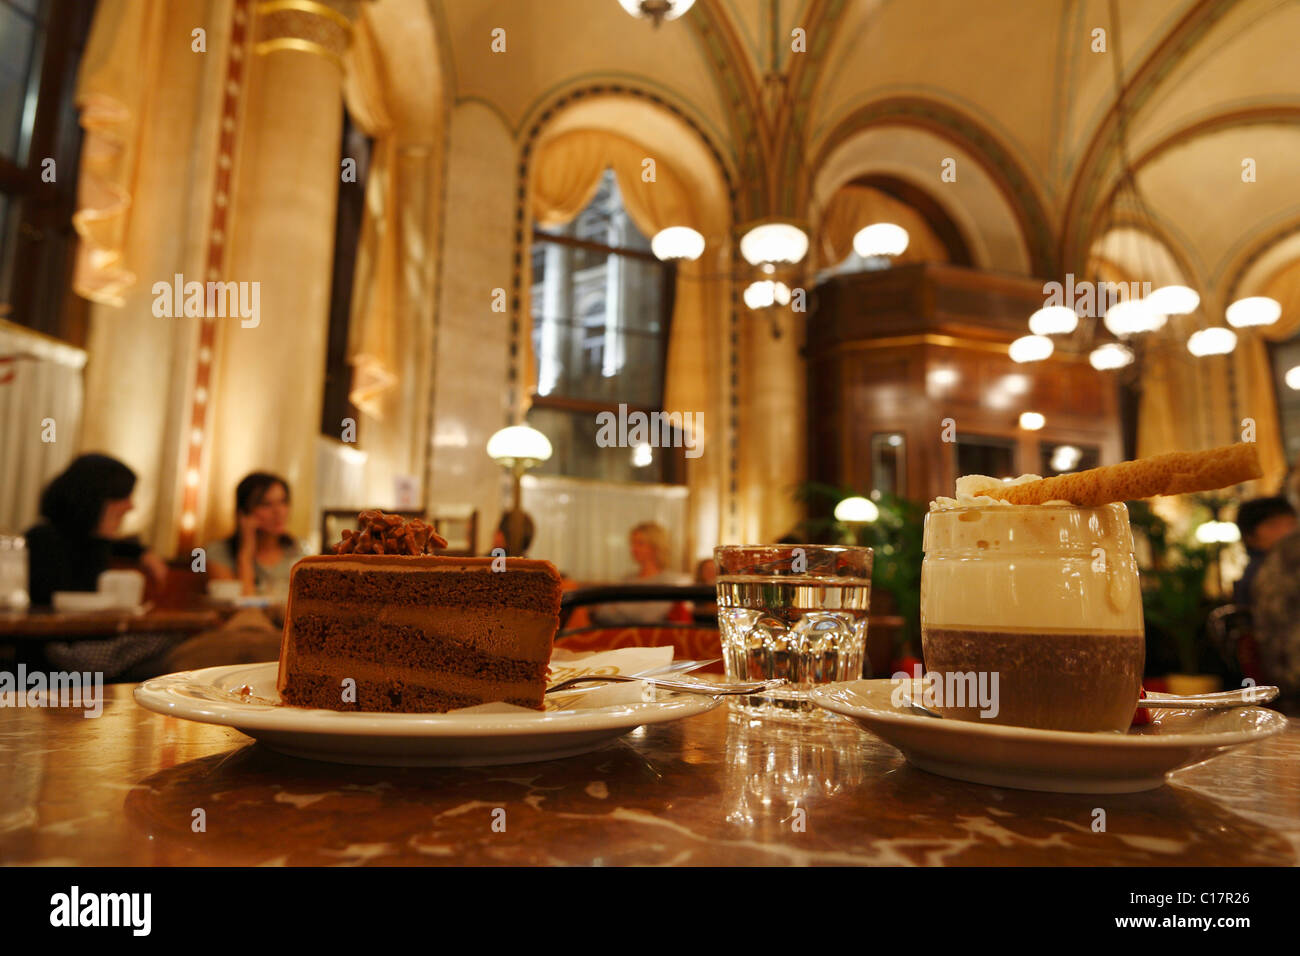 Nougat-Torte, torrone gateau e Einspaenner, mocca con panna montata, specialità di caffè nella caffetteria centrale, Palais Ferstel, Vienna Foto Stock